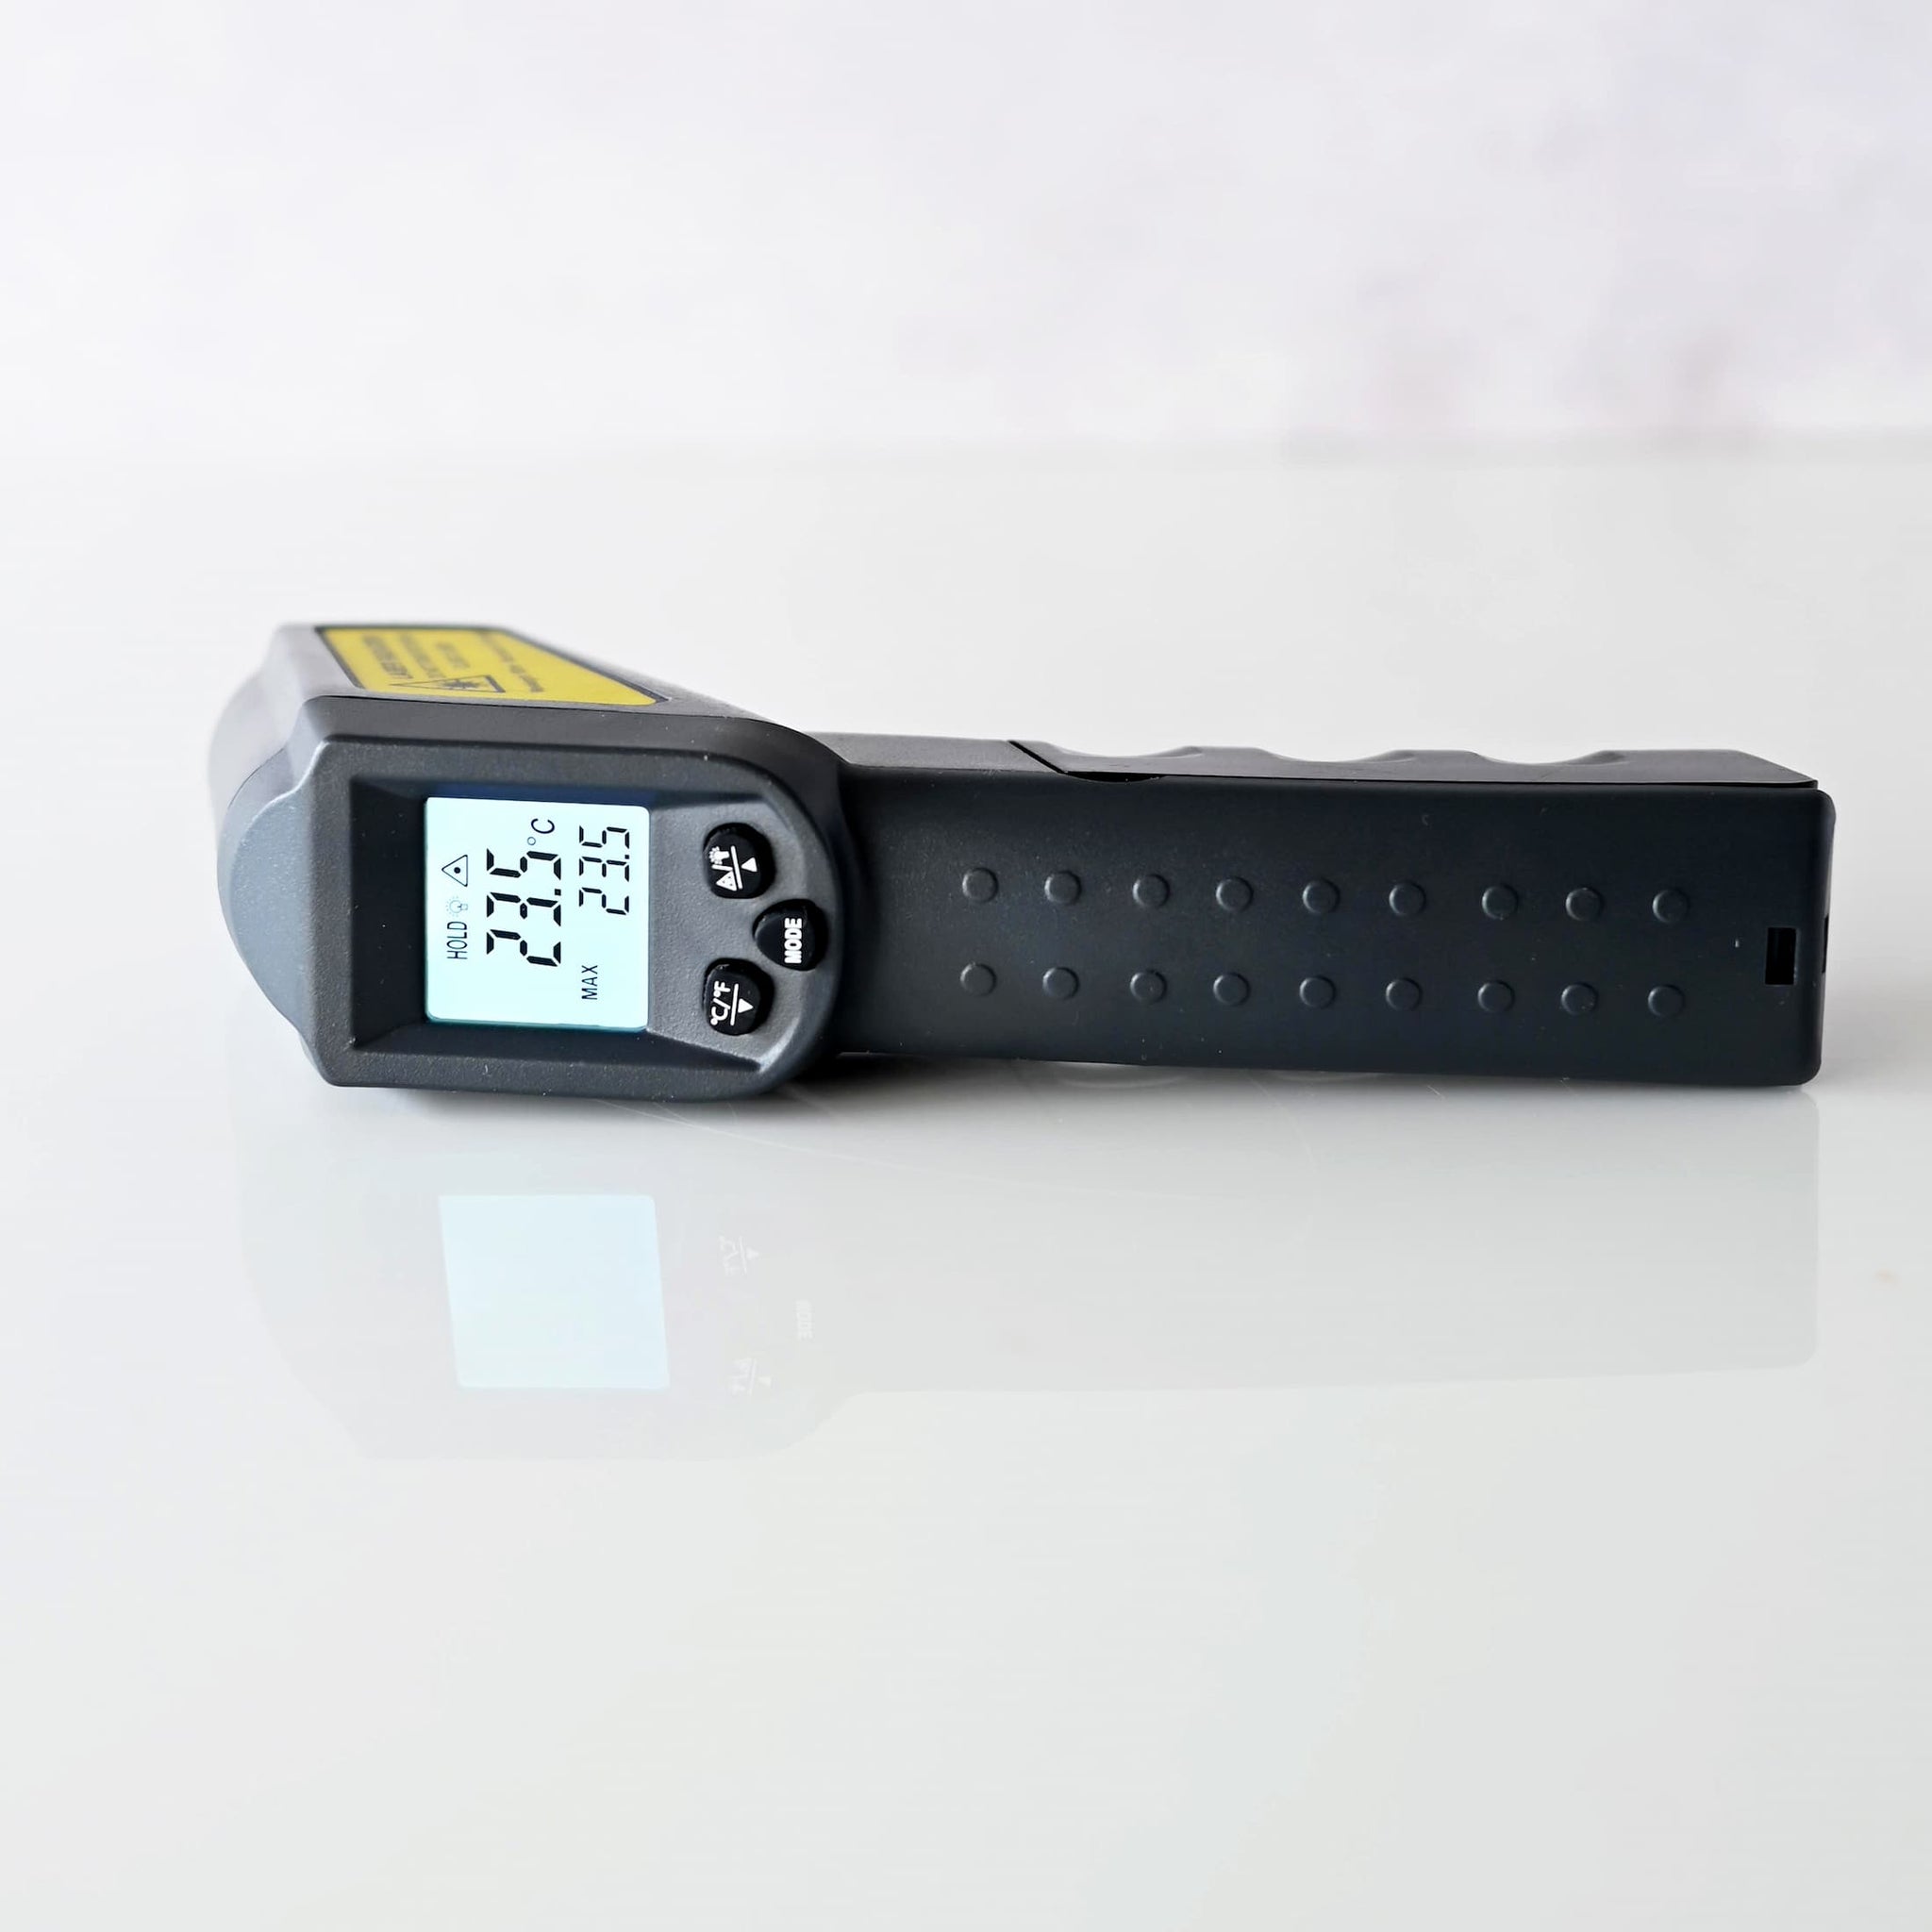 Ovana Ovana Infrared Thermometer